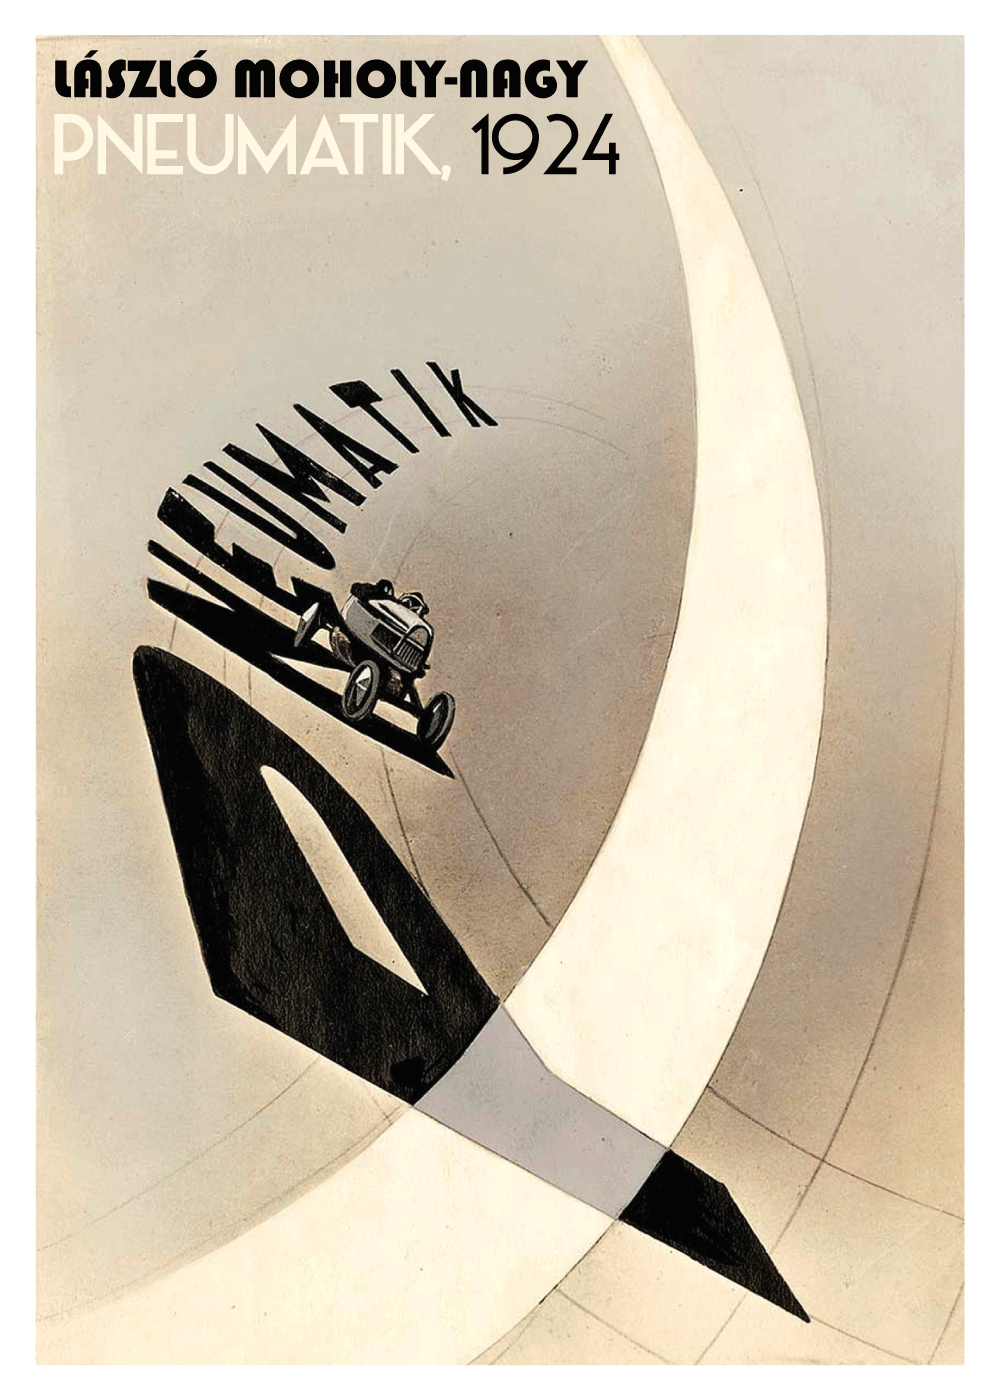 Billede af Pneumatik - László Moholy-Nagy kunstplakat